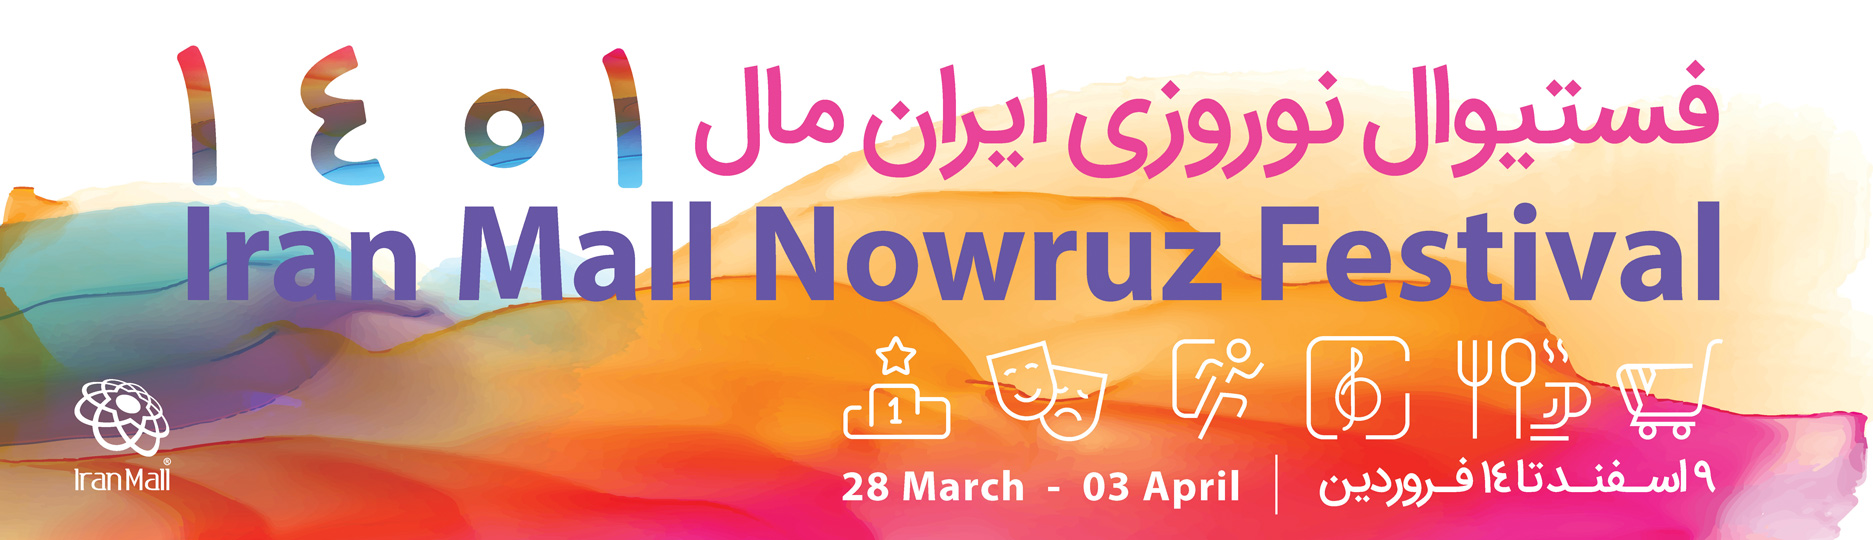 Nowruz Festival is held in Iran ‌ Mall